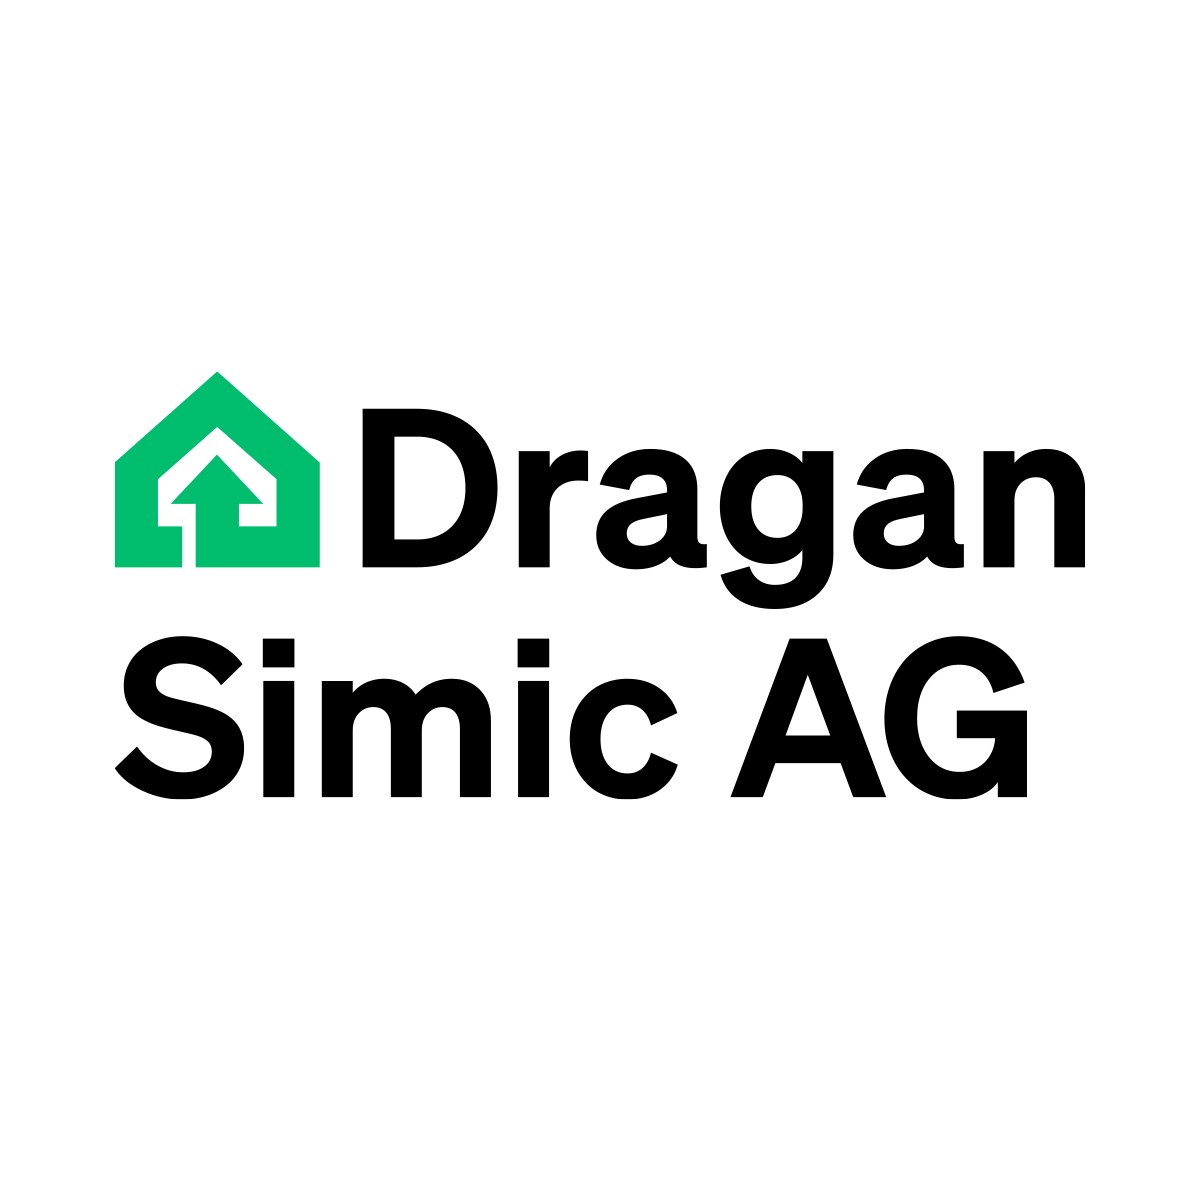 Dragan Simic AG